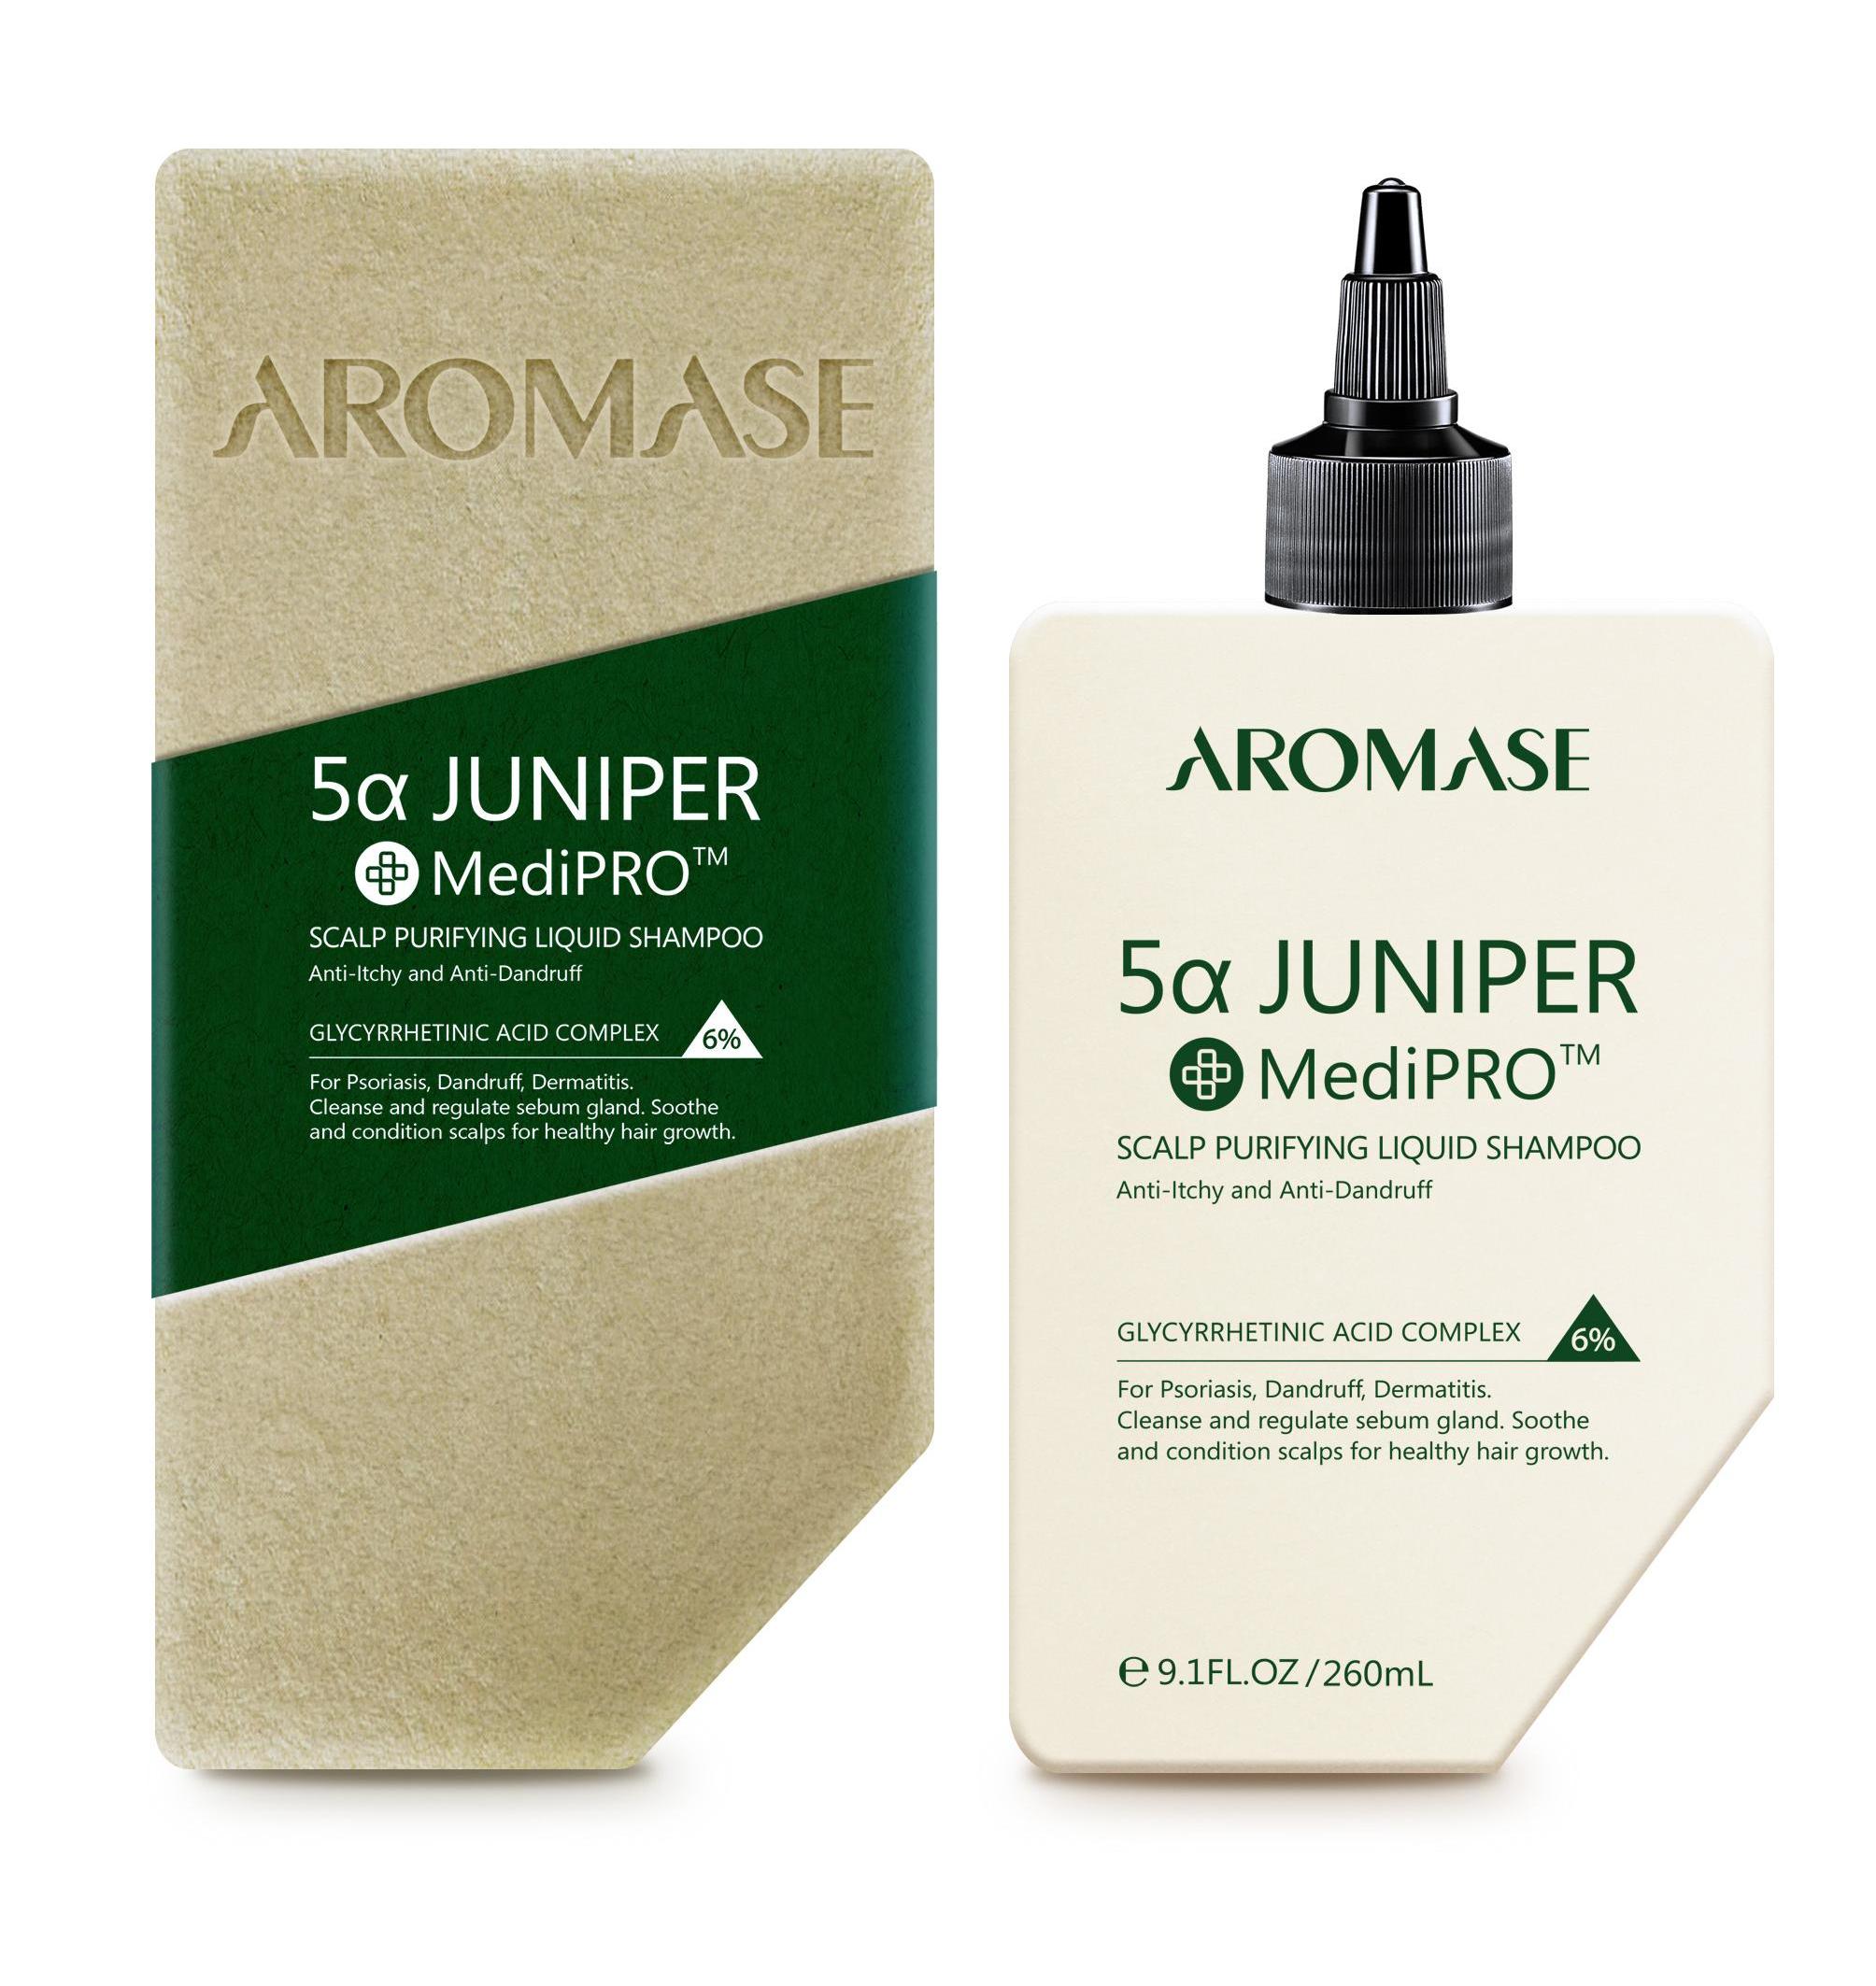  MediPRO™ 5α Juniper Scalp Purifying Liquid Shampoo / MacroHI co., Ltd